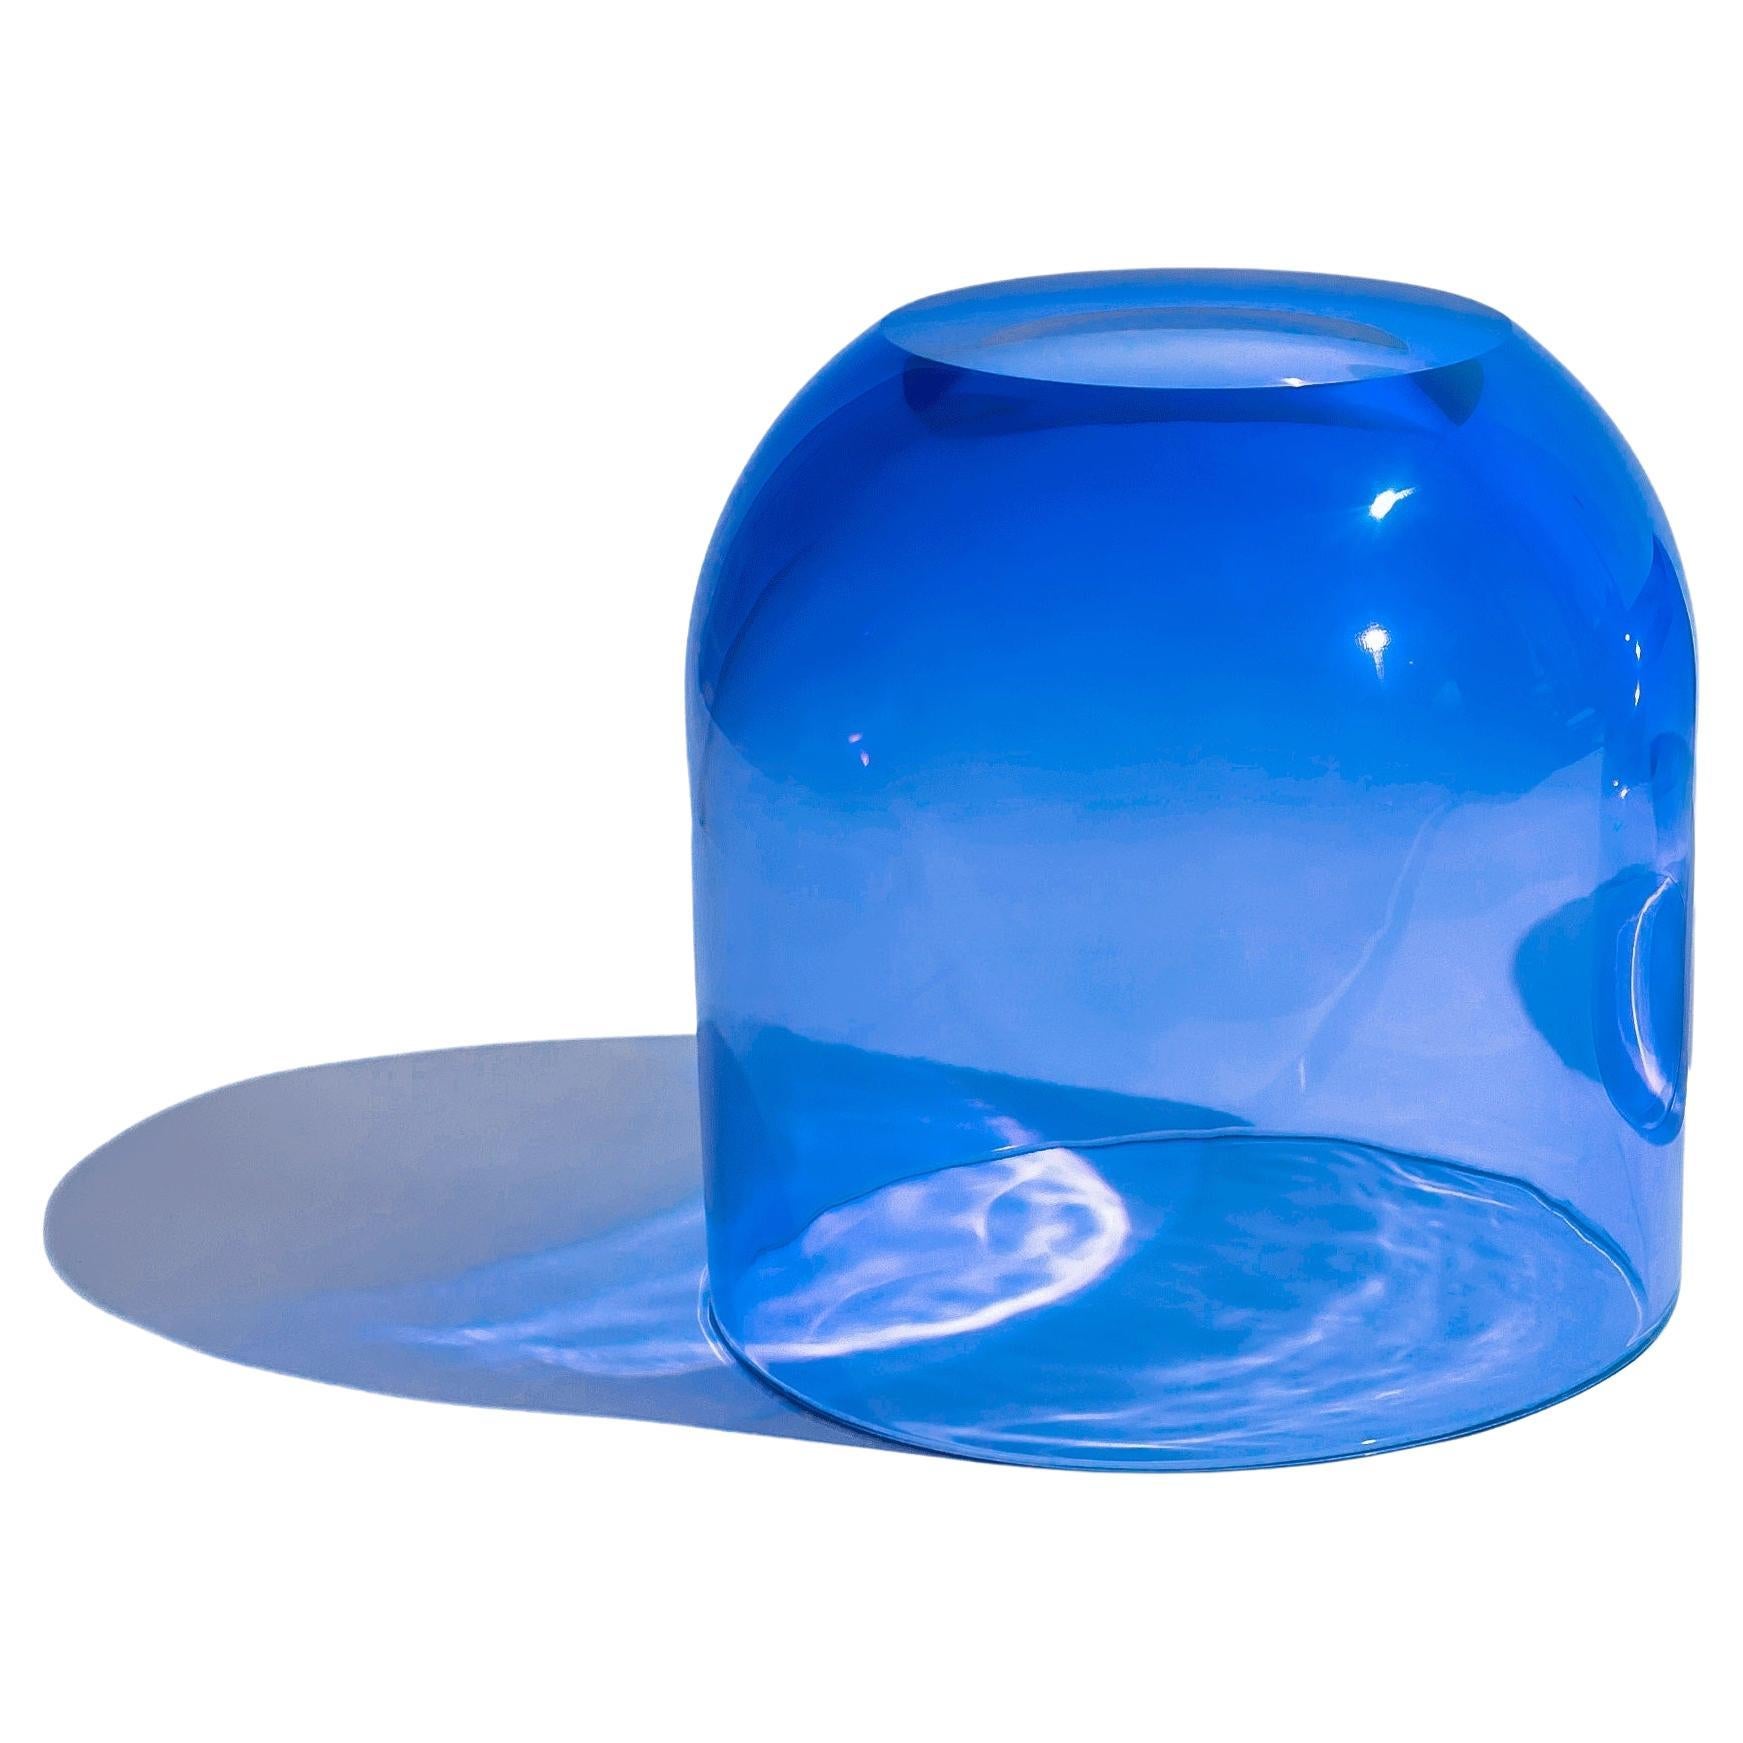 Small Blue Dew Drop, Ian Alistair Cochran, Represented by Tuleste Factory